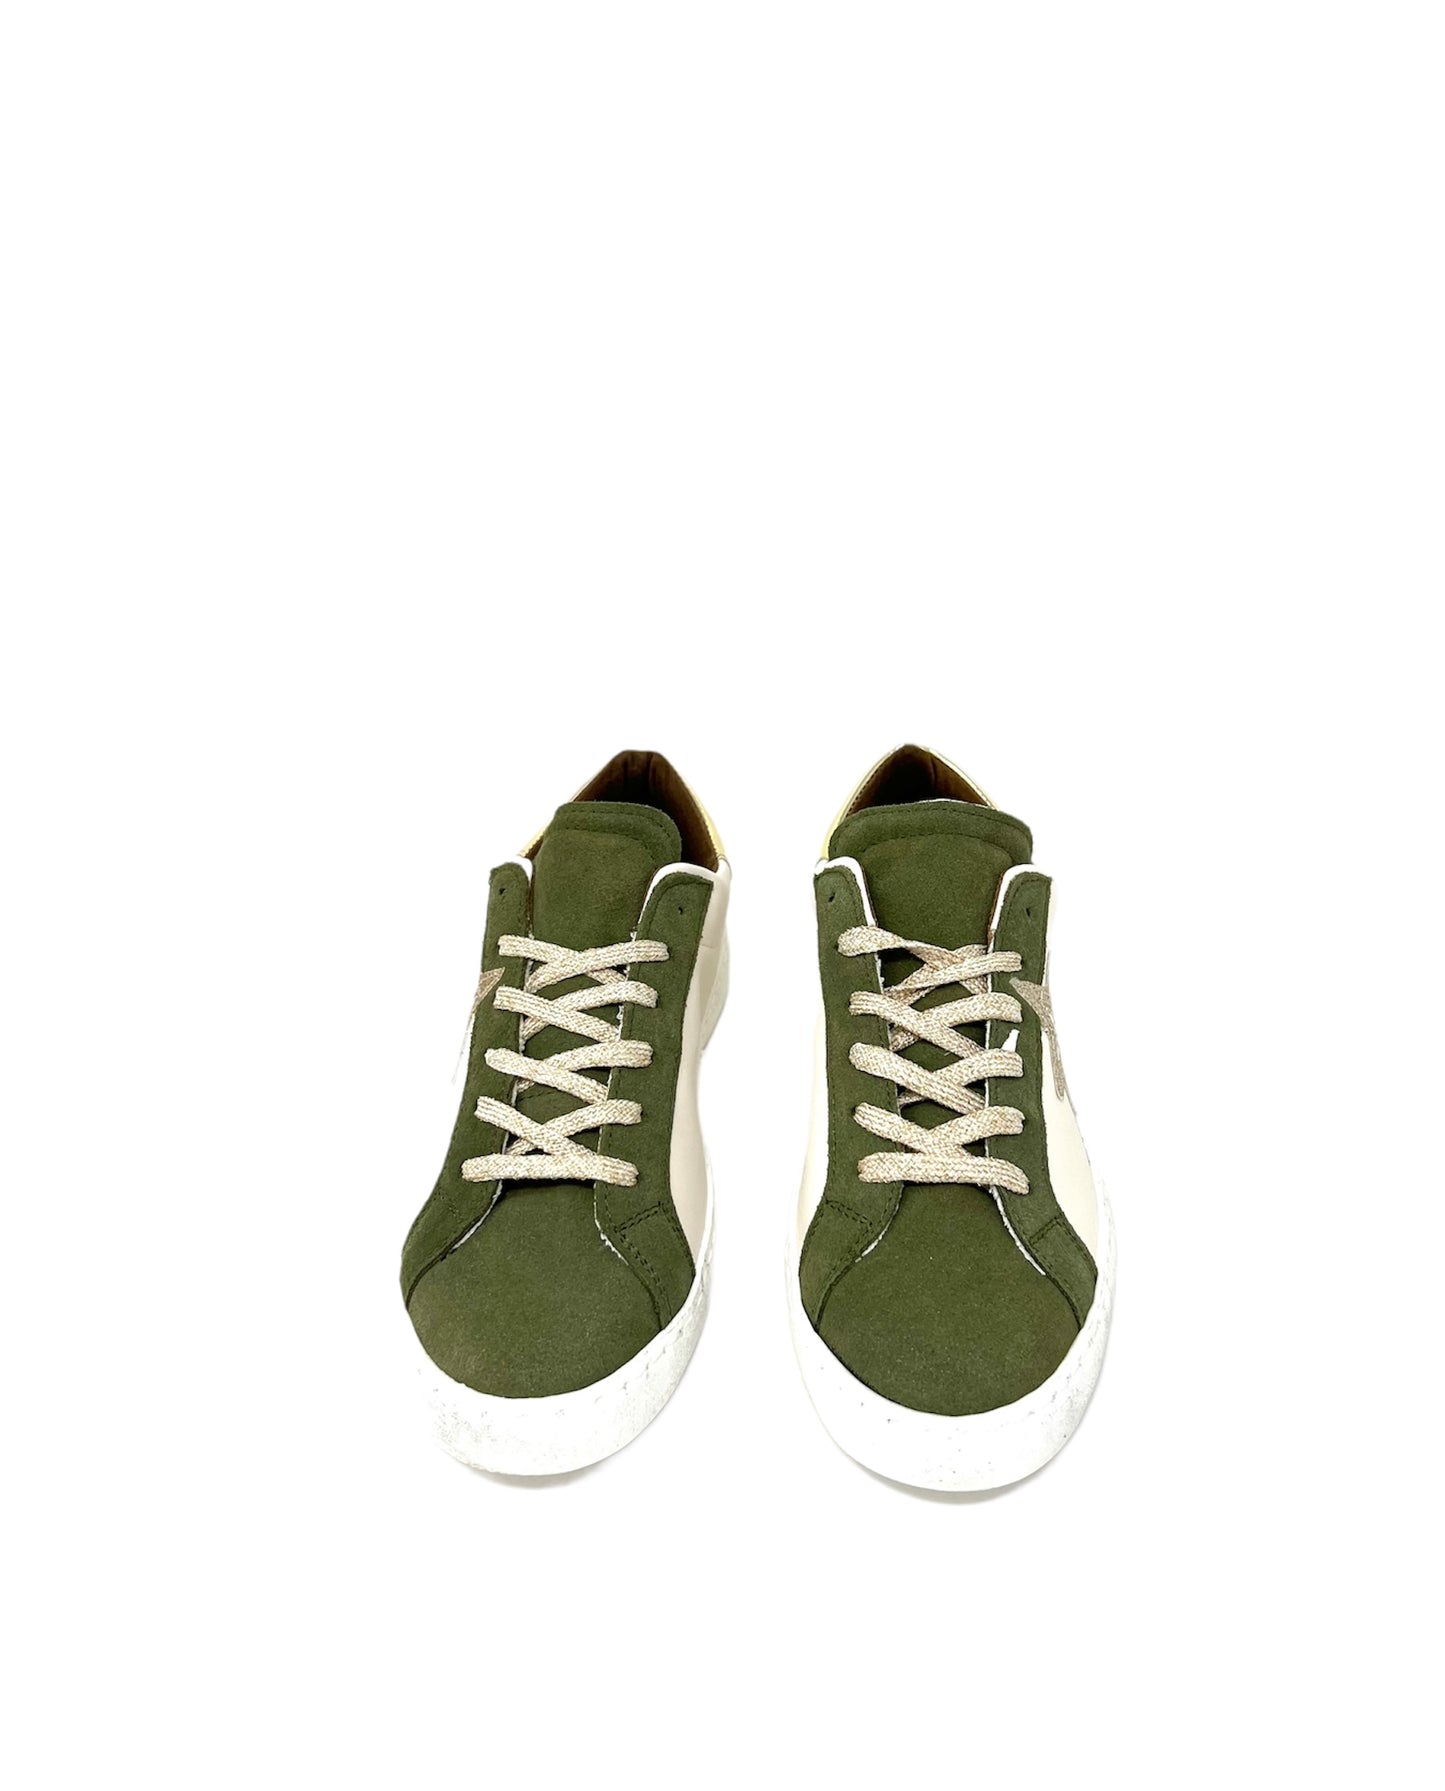 Sneakers stella militare -KURLIVE